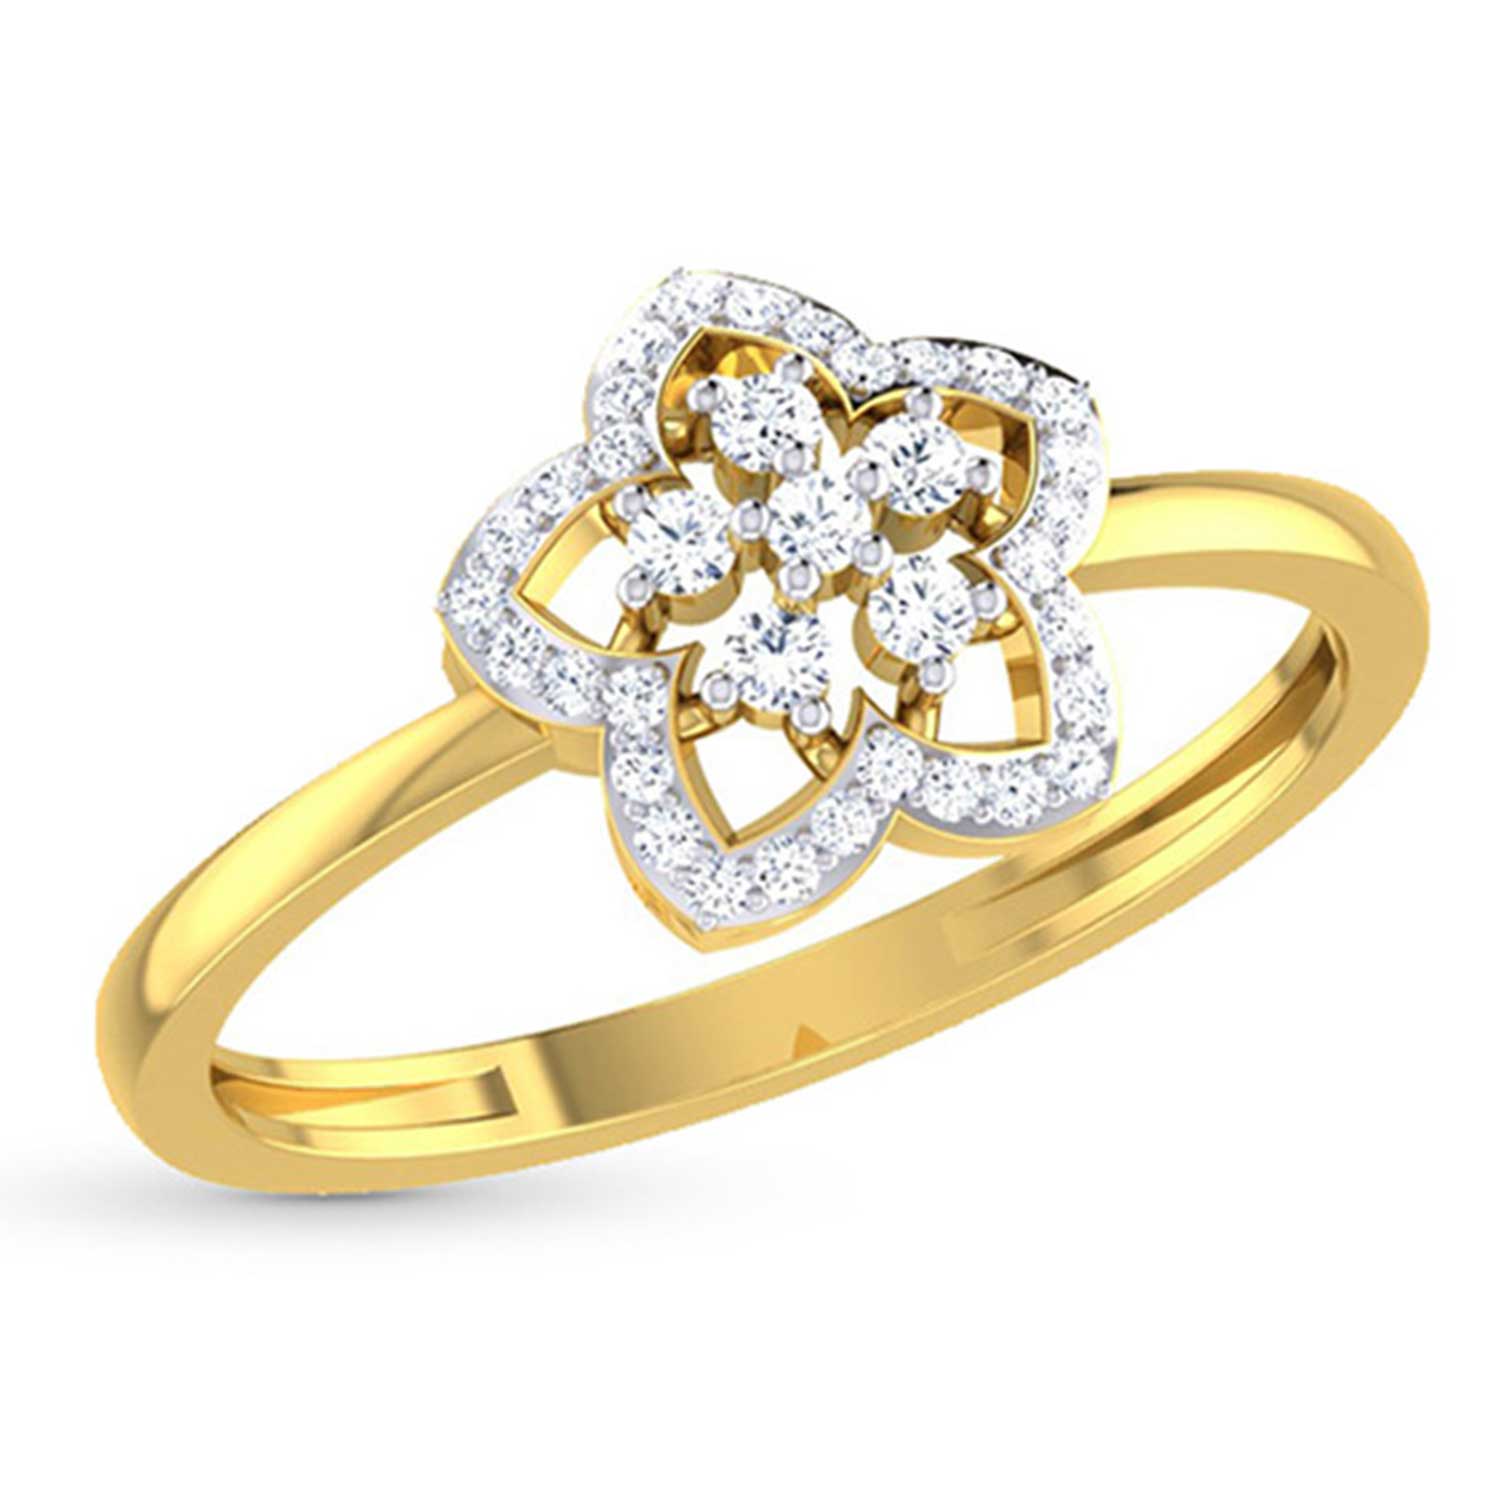 Gold Ring With Pearl - Lagu Bandhu